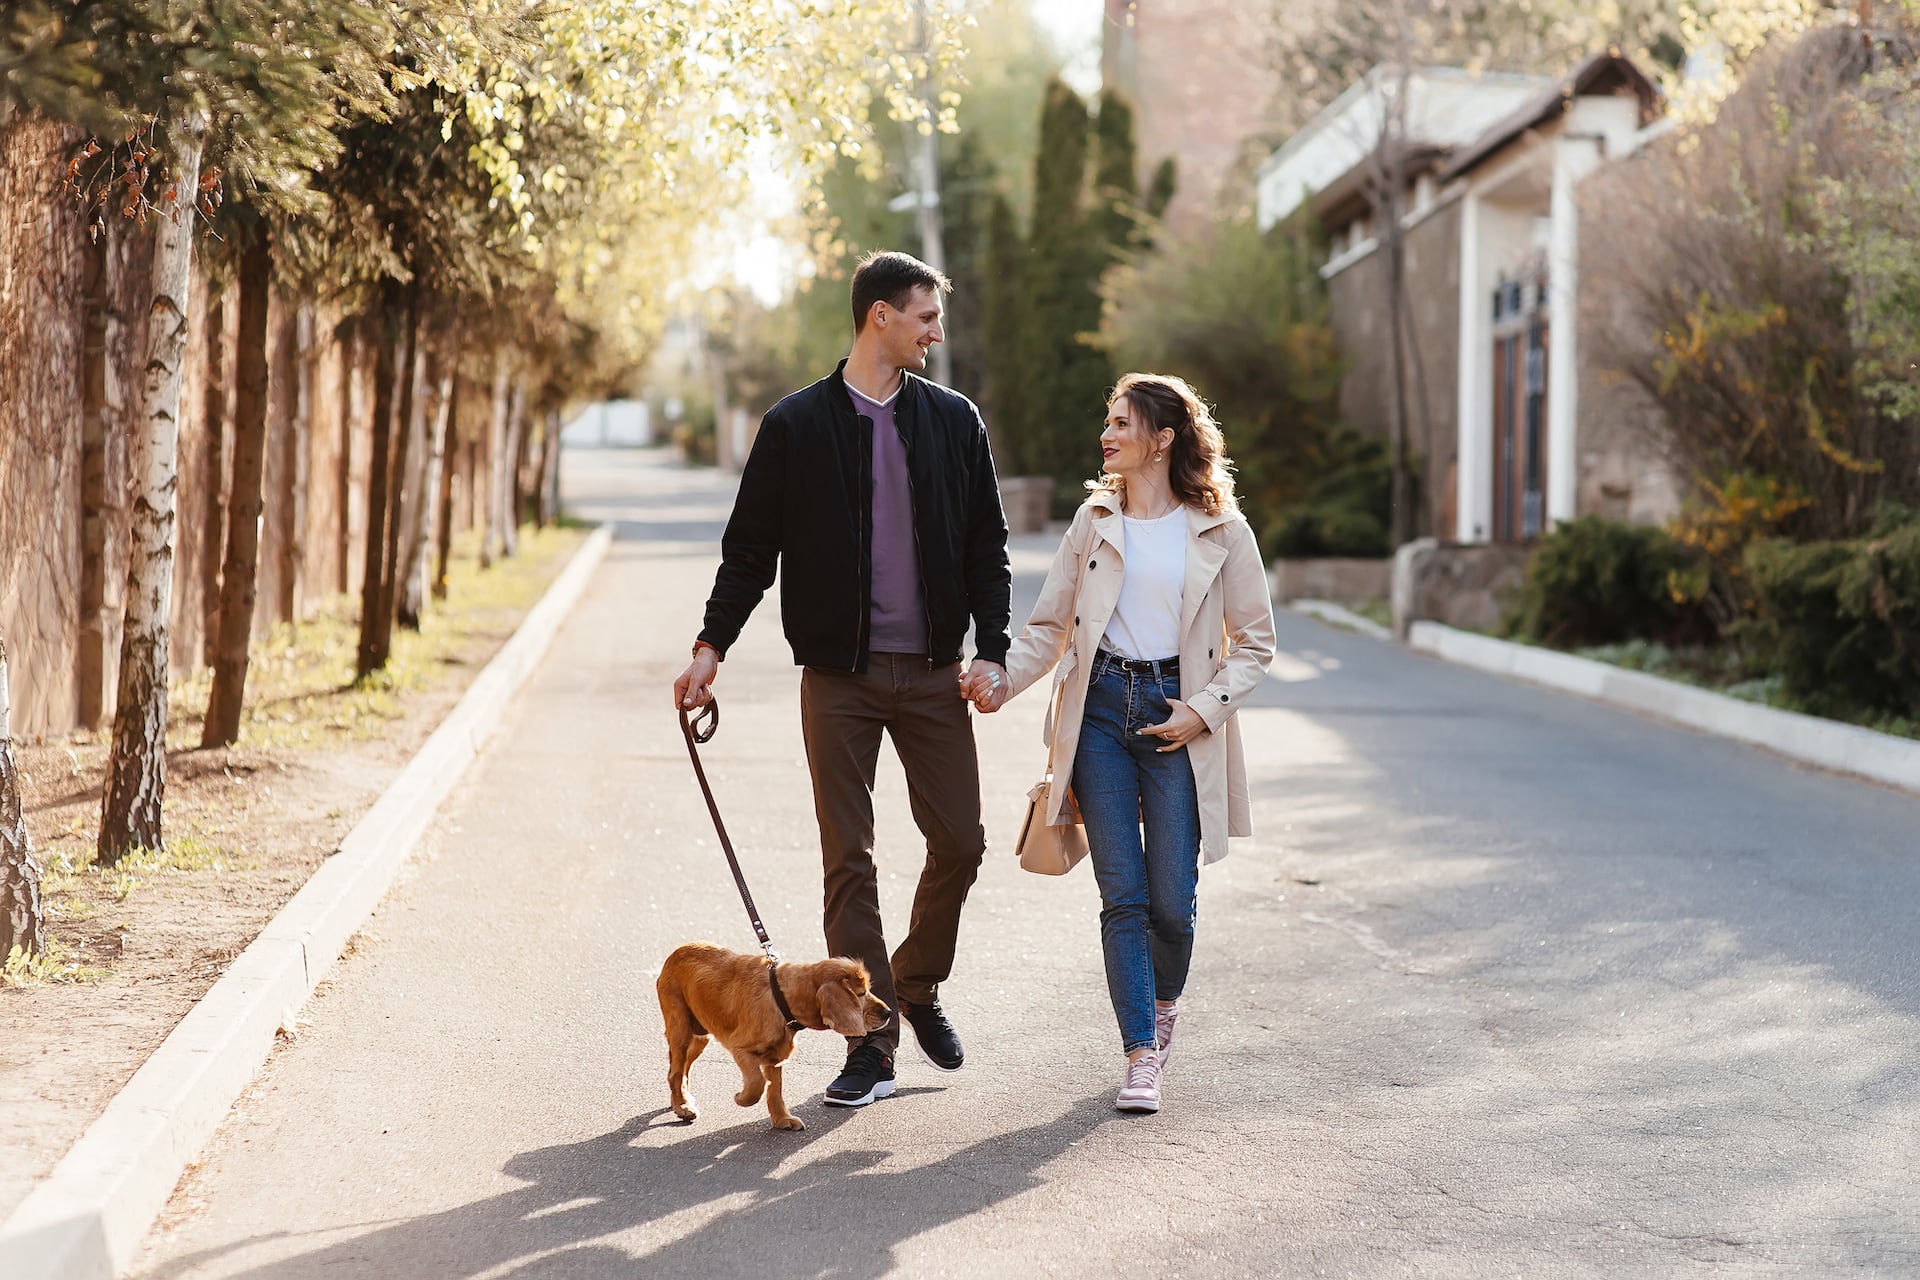 Young couple walking dog on treelined street